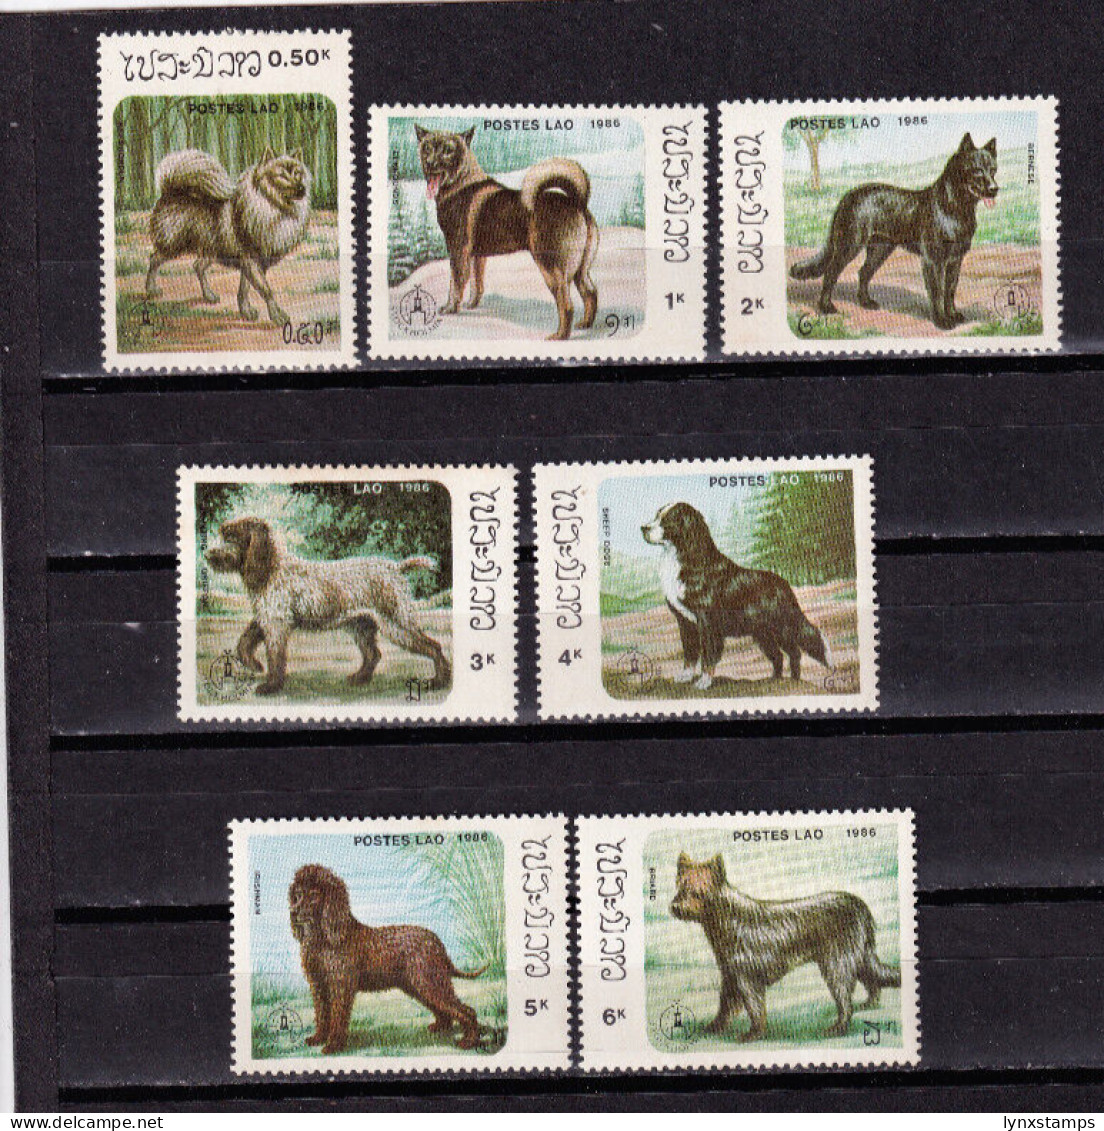 LI04 Laos 1986 International Stamp Exhibition "Stockholmia '86" Dogs Mint Stamps - Laos